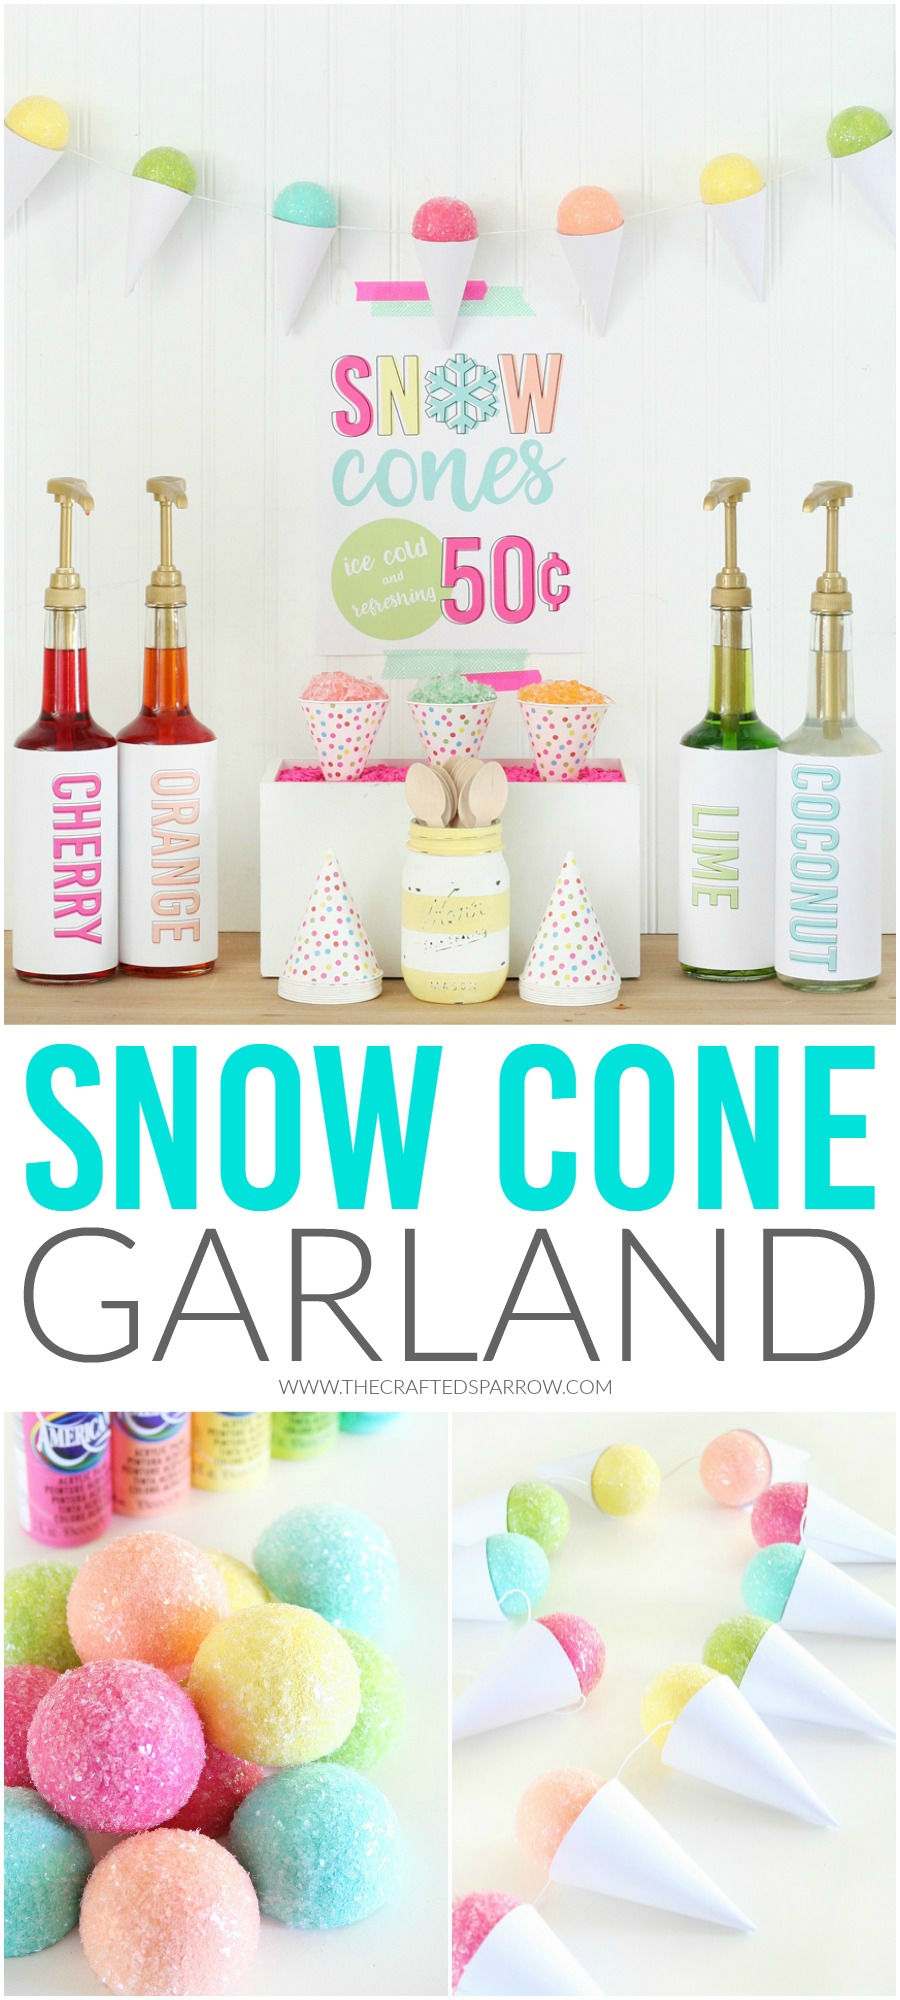 https://www.thecraftedsparrow.com/wp-content/uploads/2016/06/DIY-Snow-Cone-Garland.jpg